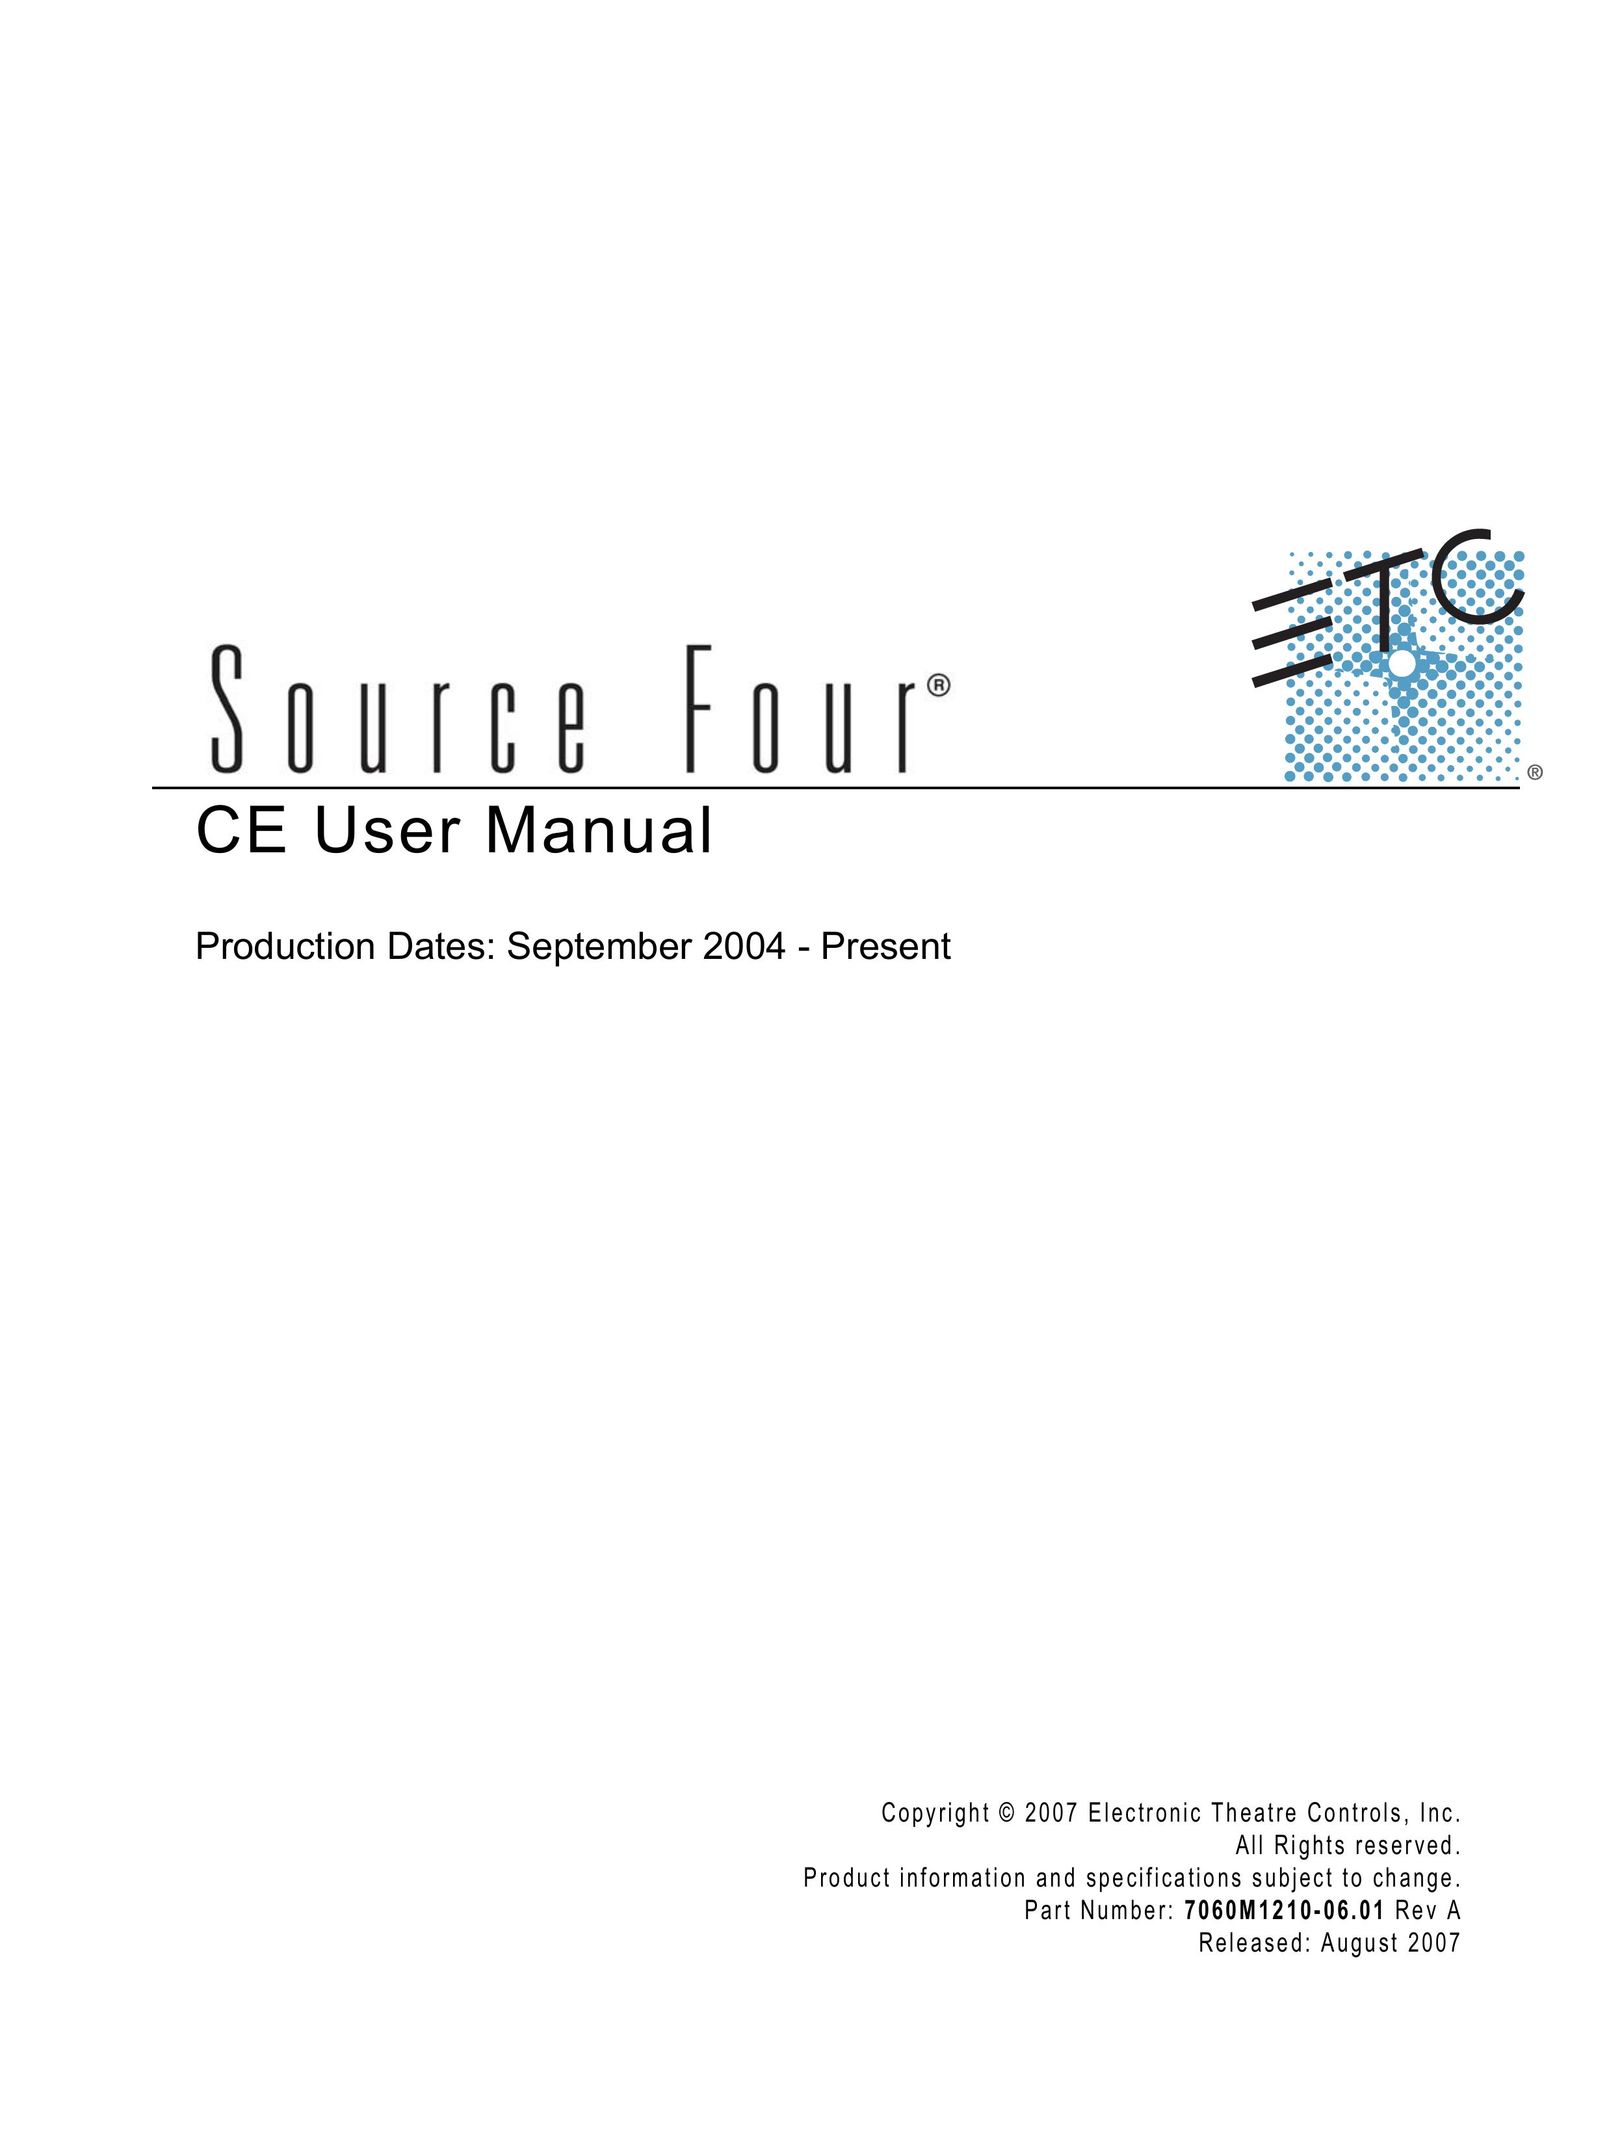 Source Technologies 436 Indoor Furnishings User Manual